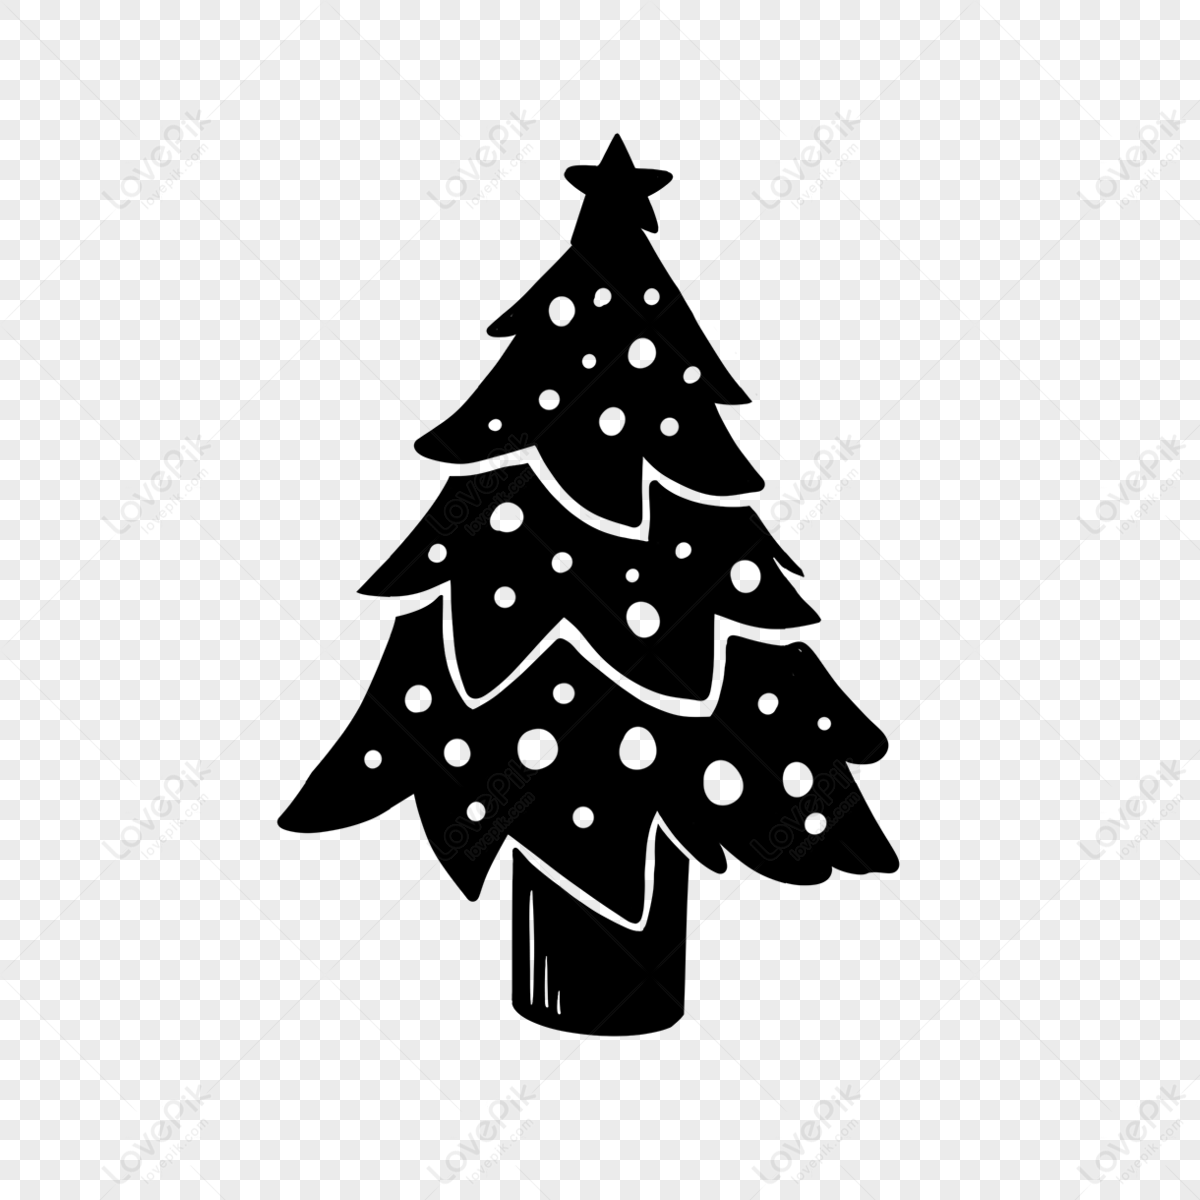 Star Christmas Christmas tree silhouette, Christmas tree,  christmas tree silhouette,  trees png image